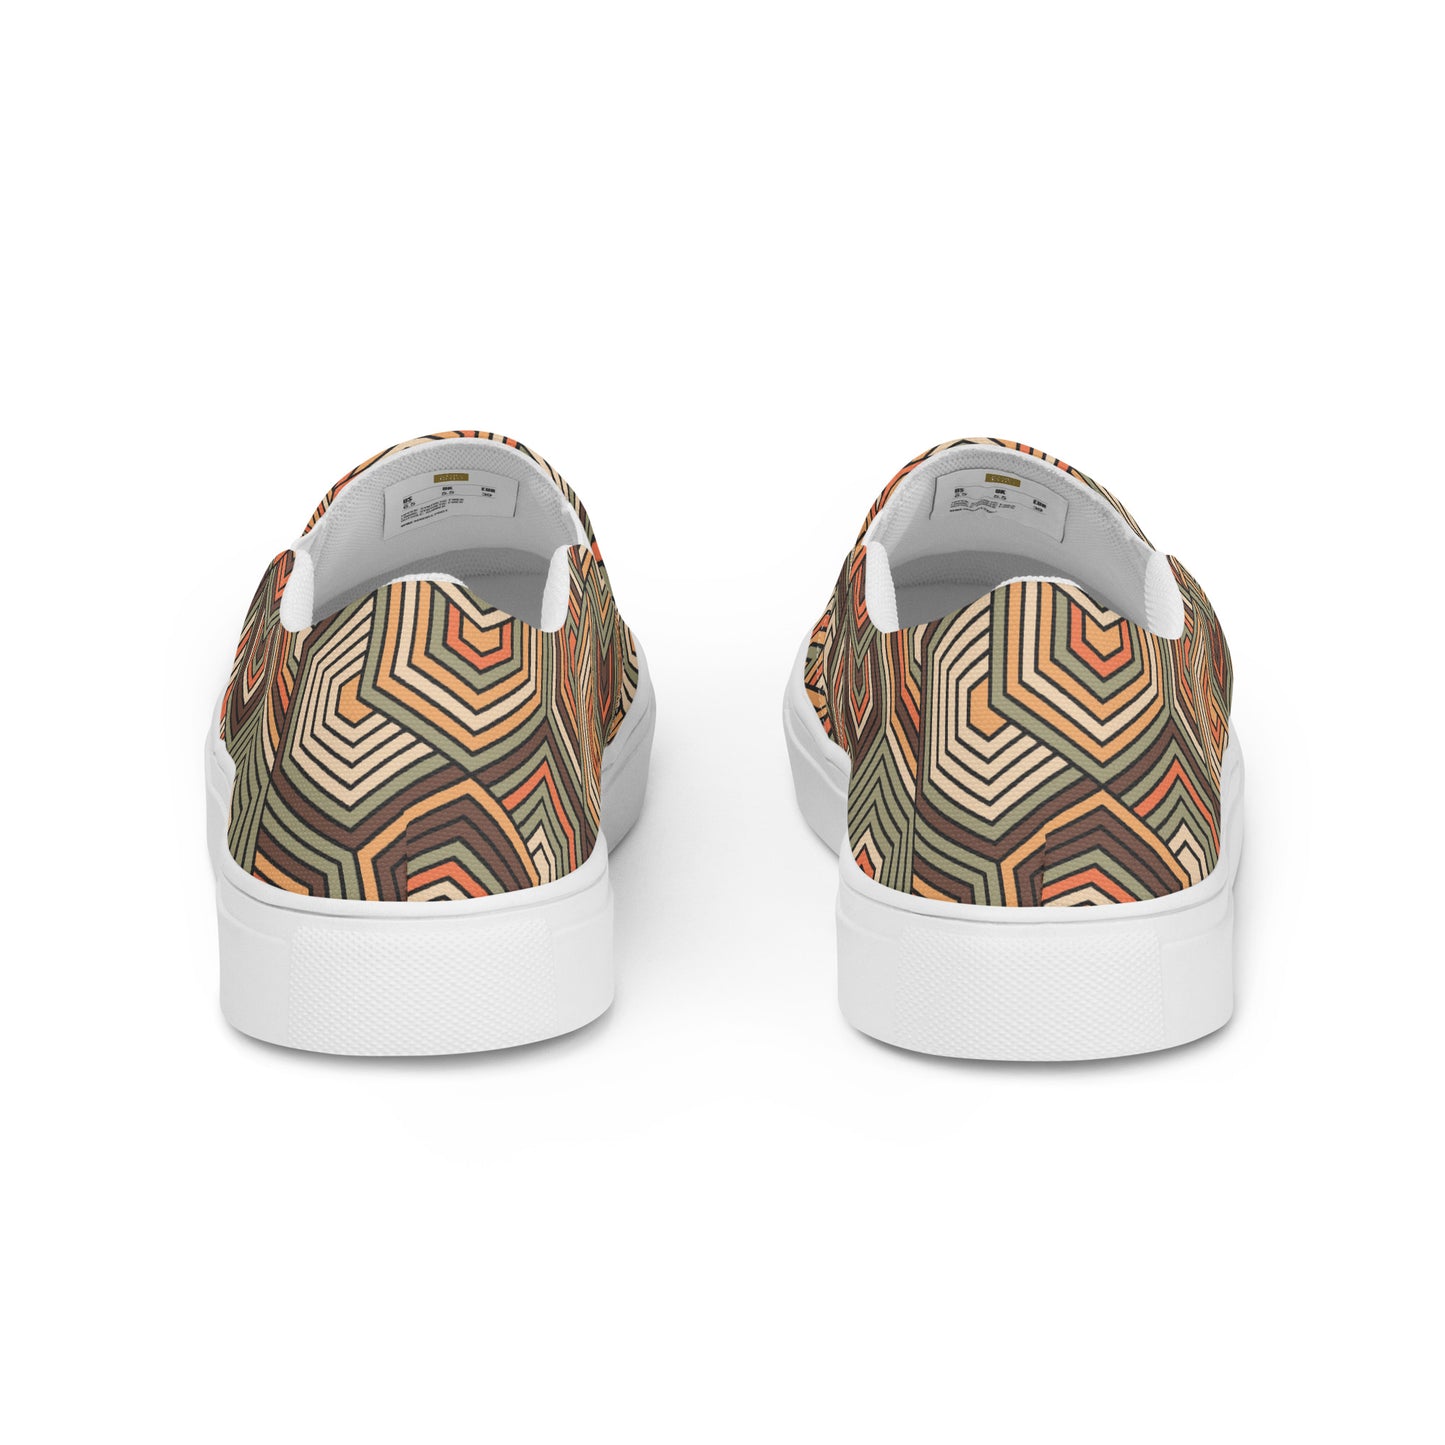 Hexagonal Retro Pattern - Women’s slip-on canvas shoes